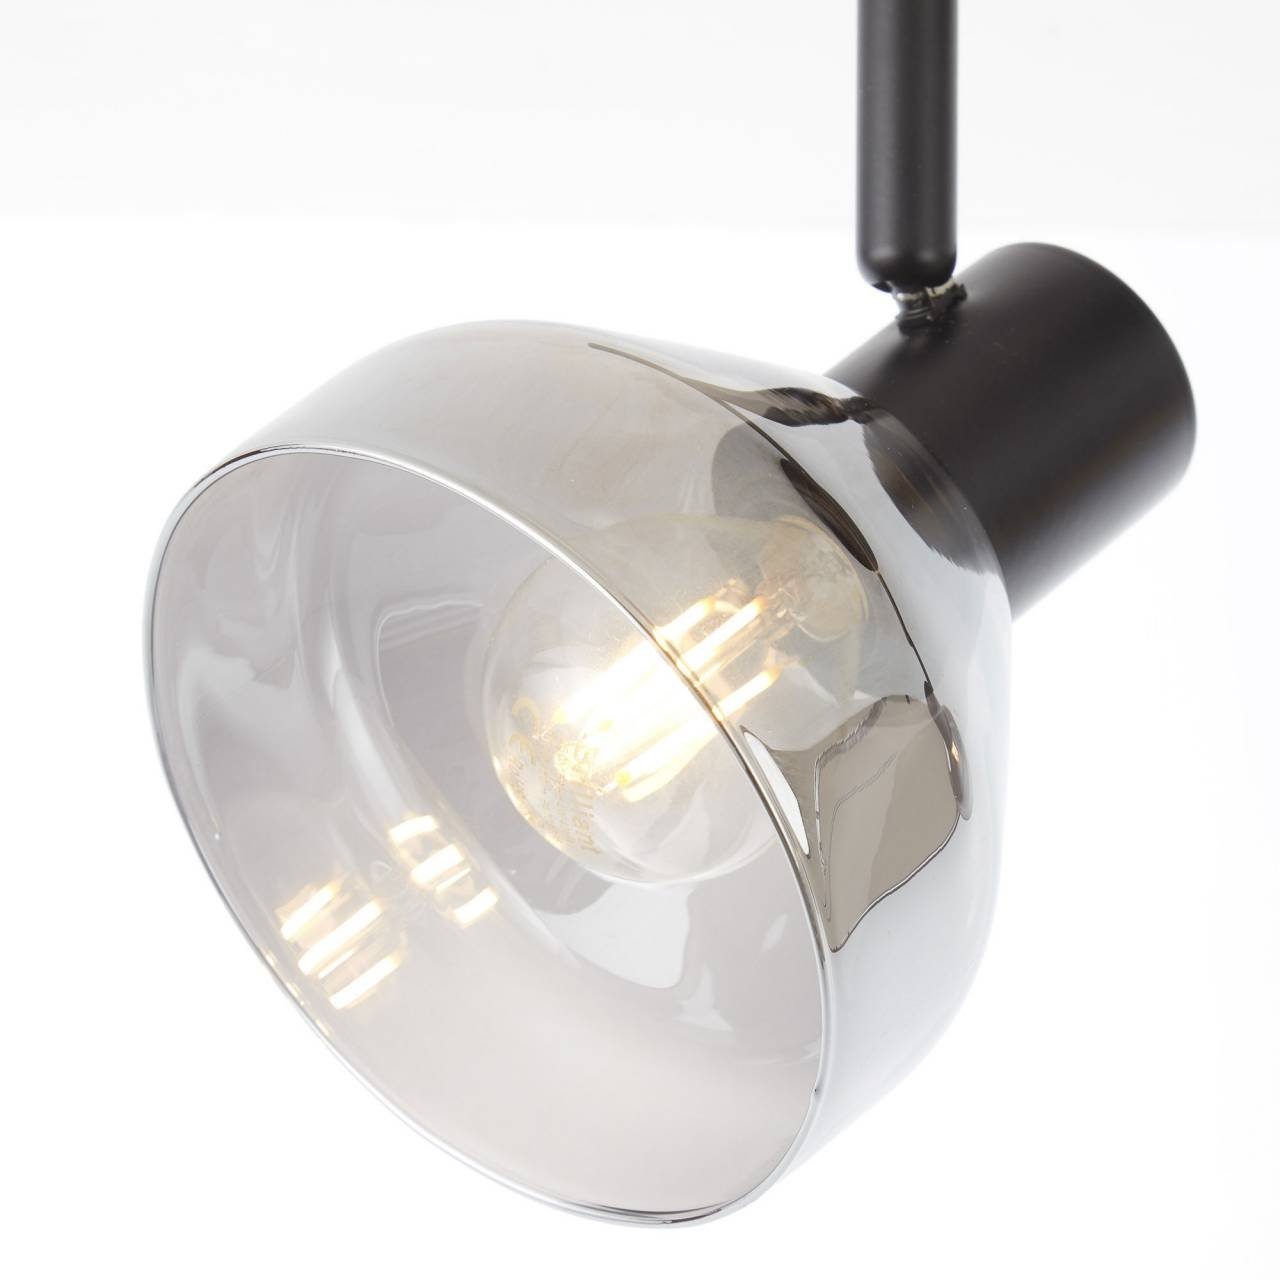 Lampe Spotrohr 4x Deckenleuchte D45, 18W Reflekt schwarzmatt/rauchglas Brilliant 4flg E14, Reflekt,